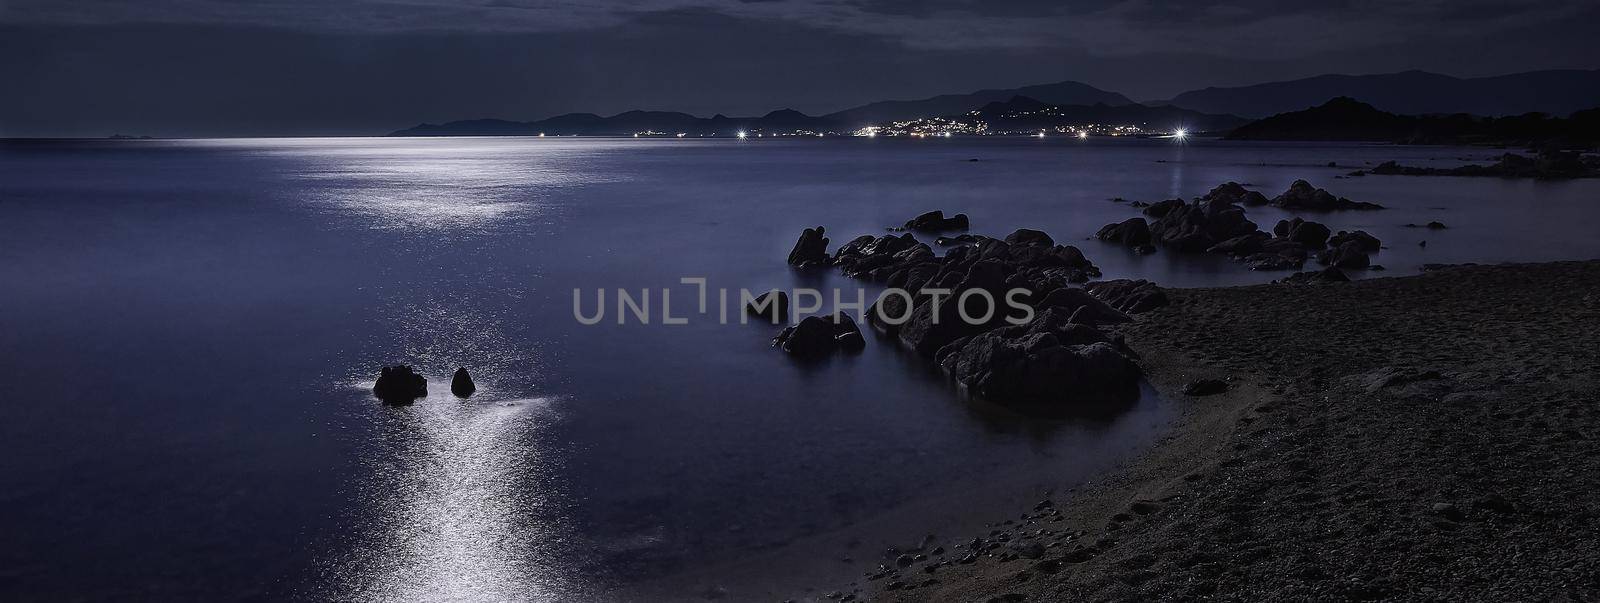 Sardinia beach night, banner image with copy space